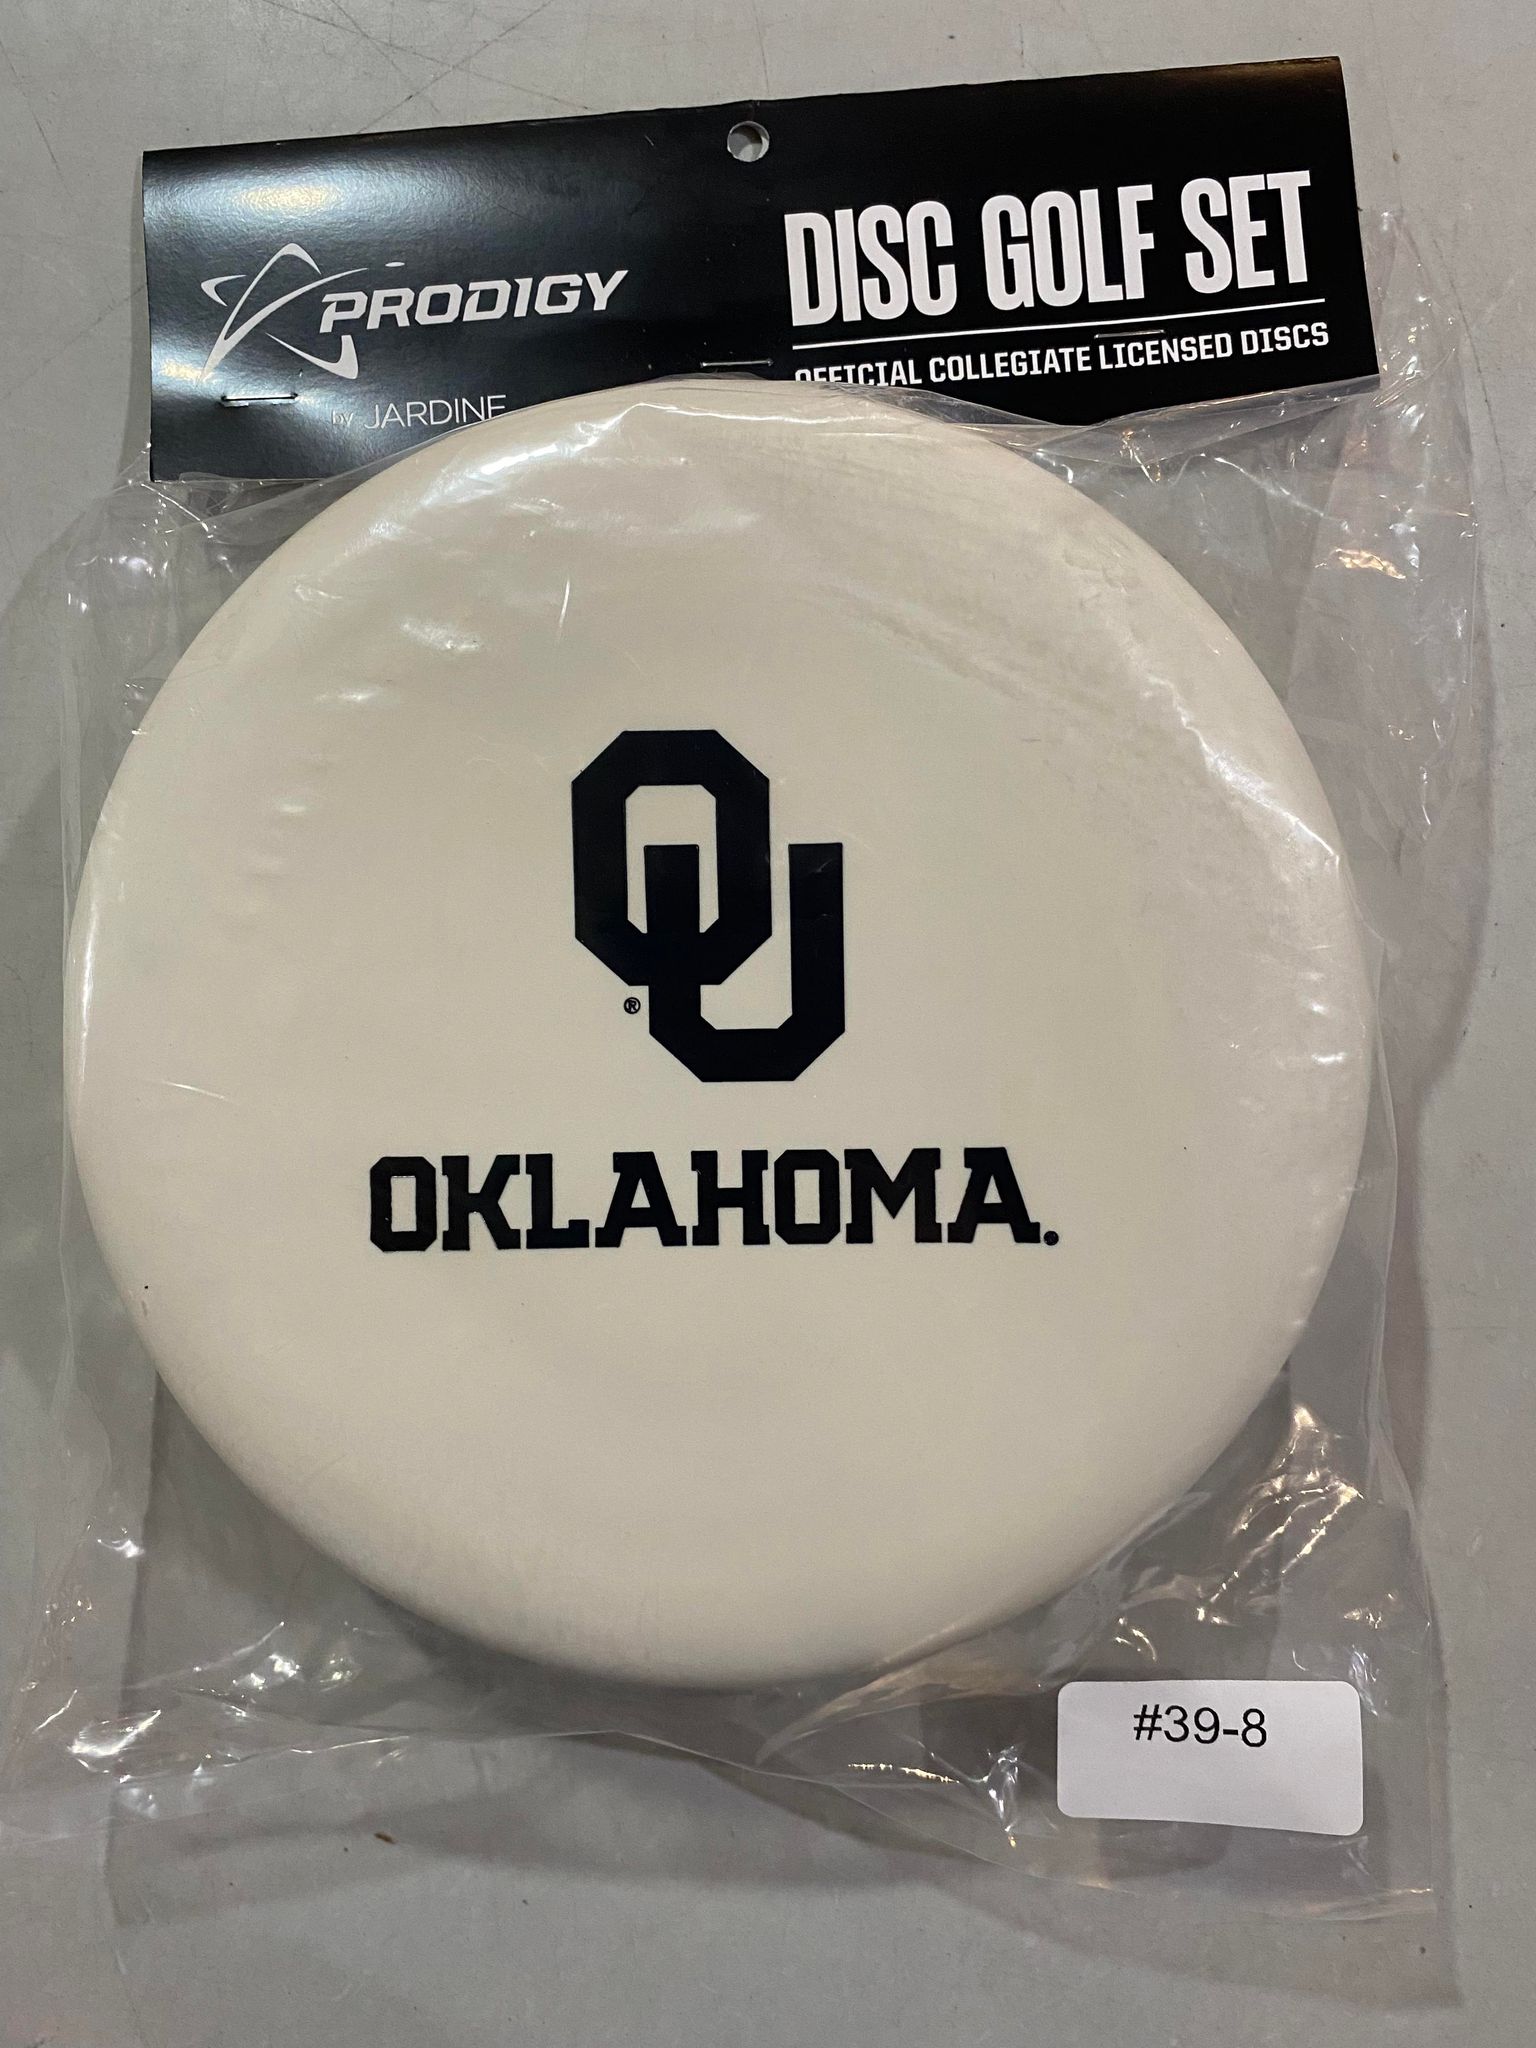 University of Oklahoma Disc Golf Set - 3 Discs (Prodigy Discs)